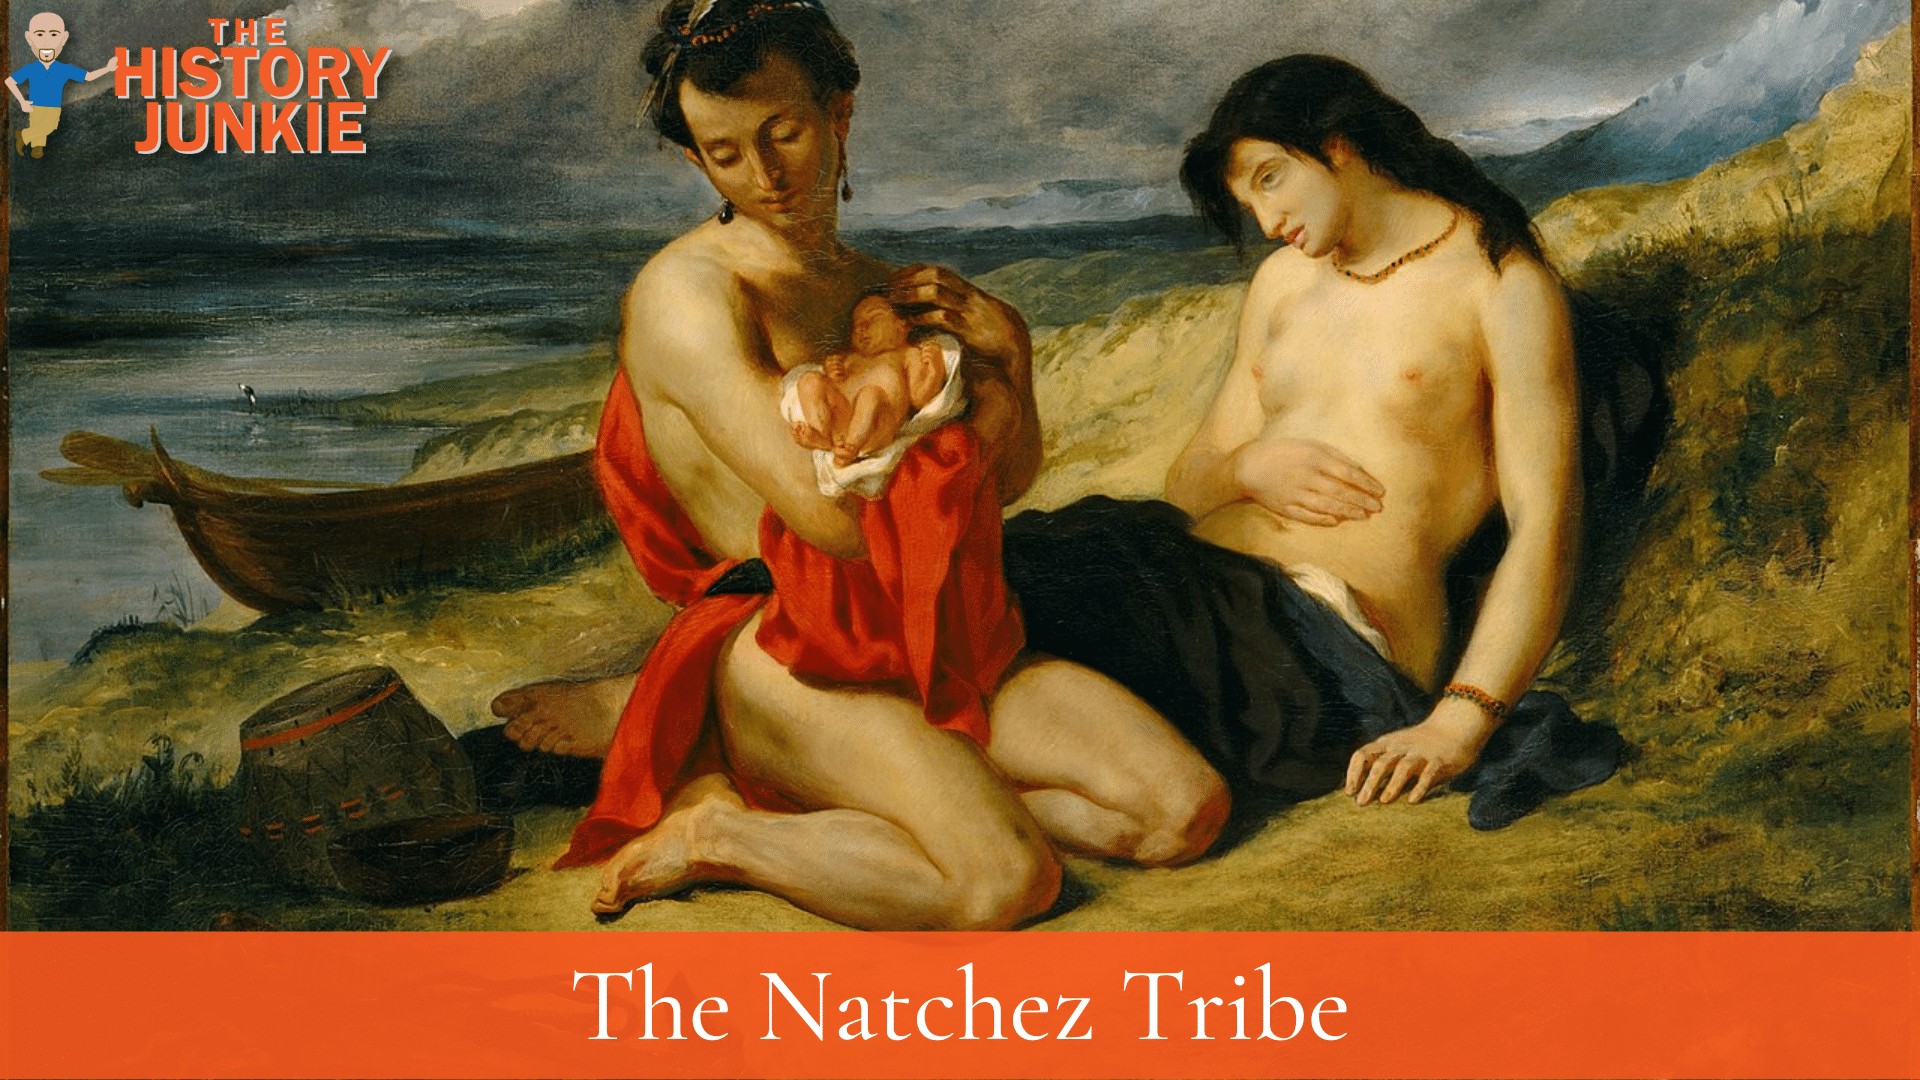 The Natchez Tribe